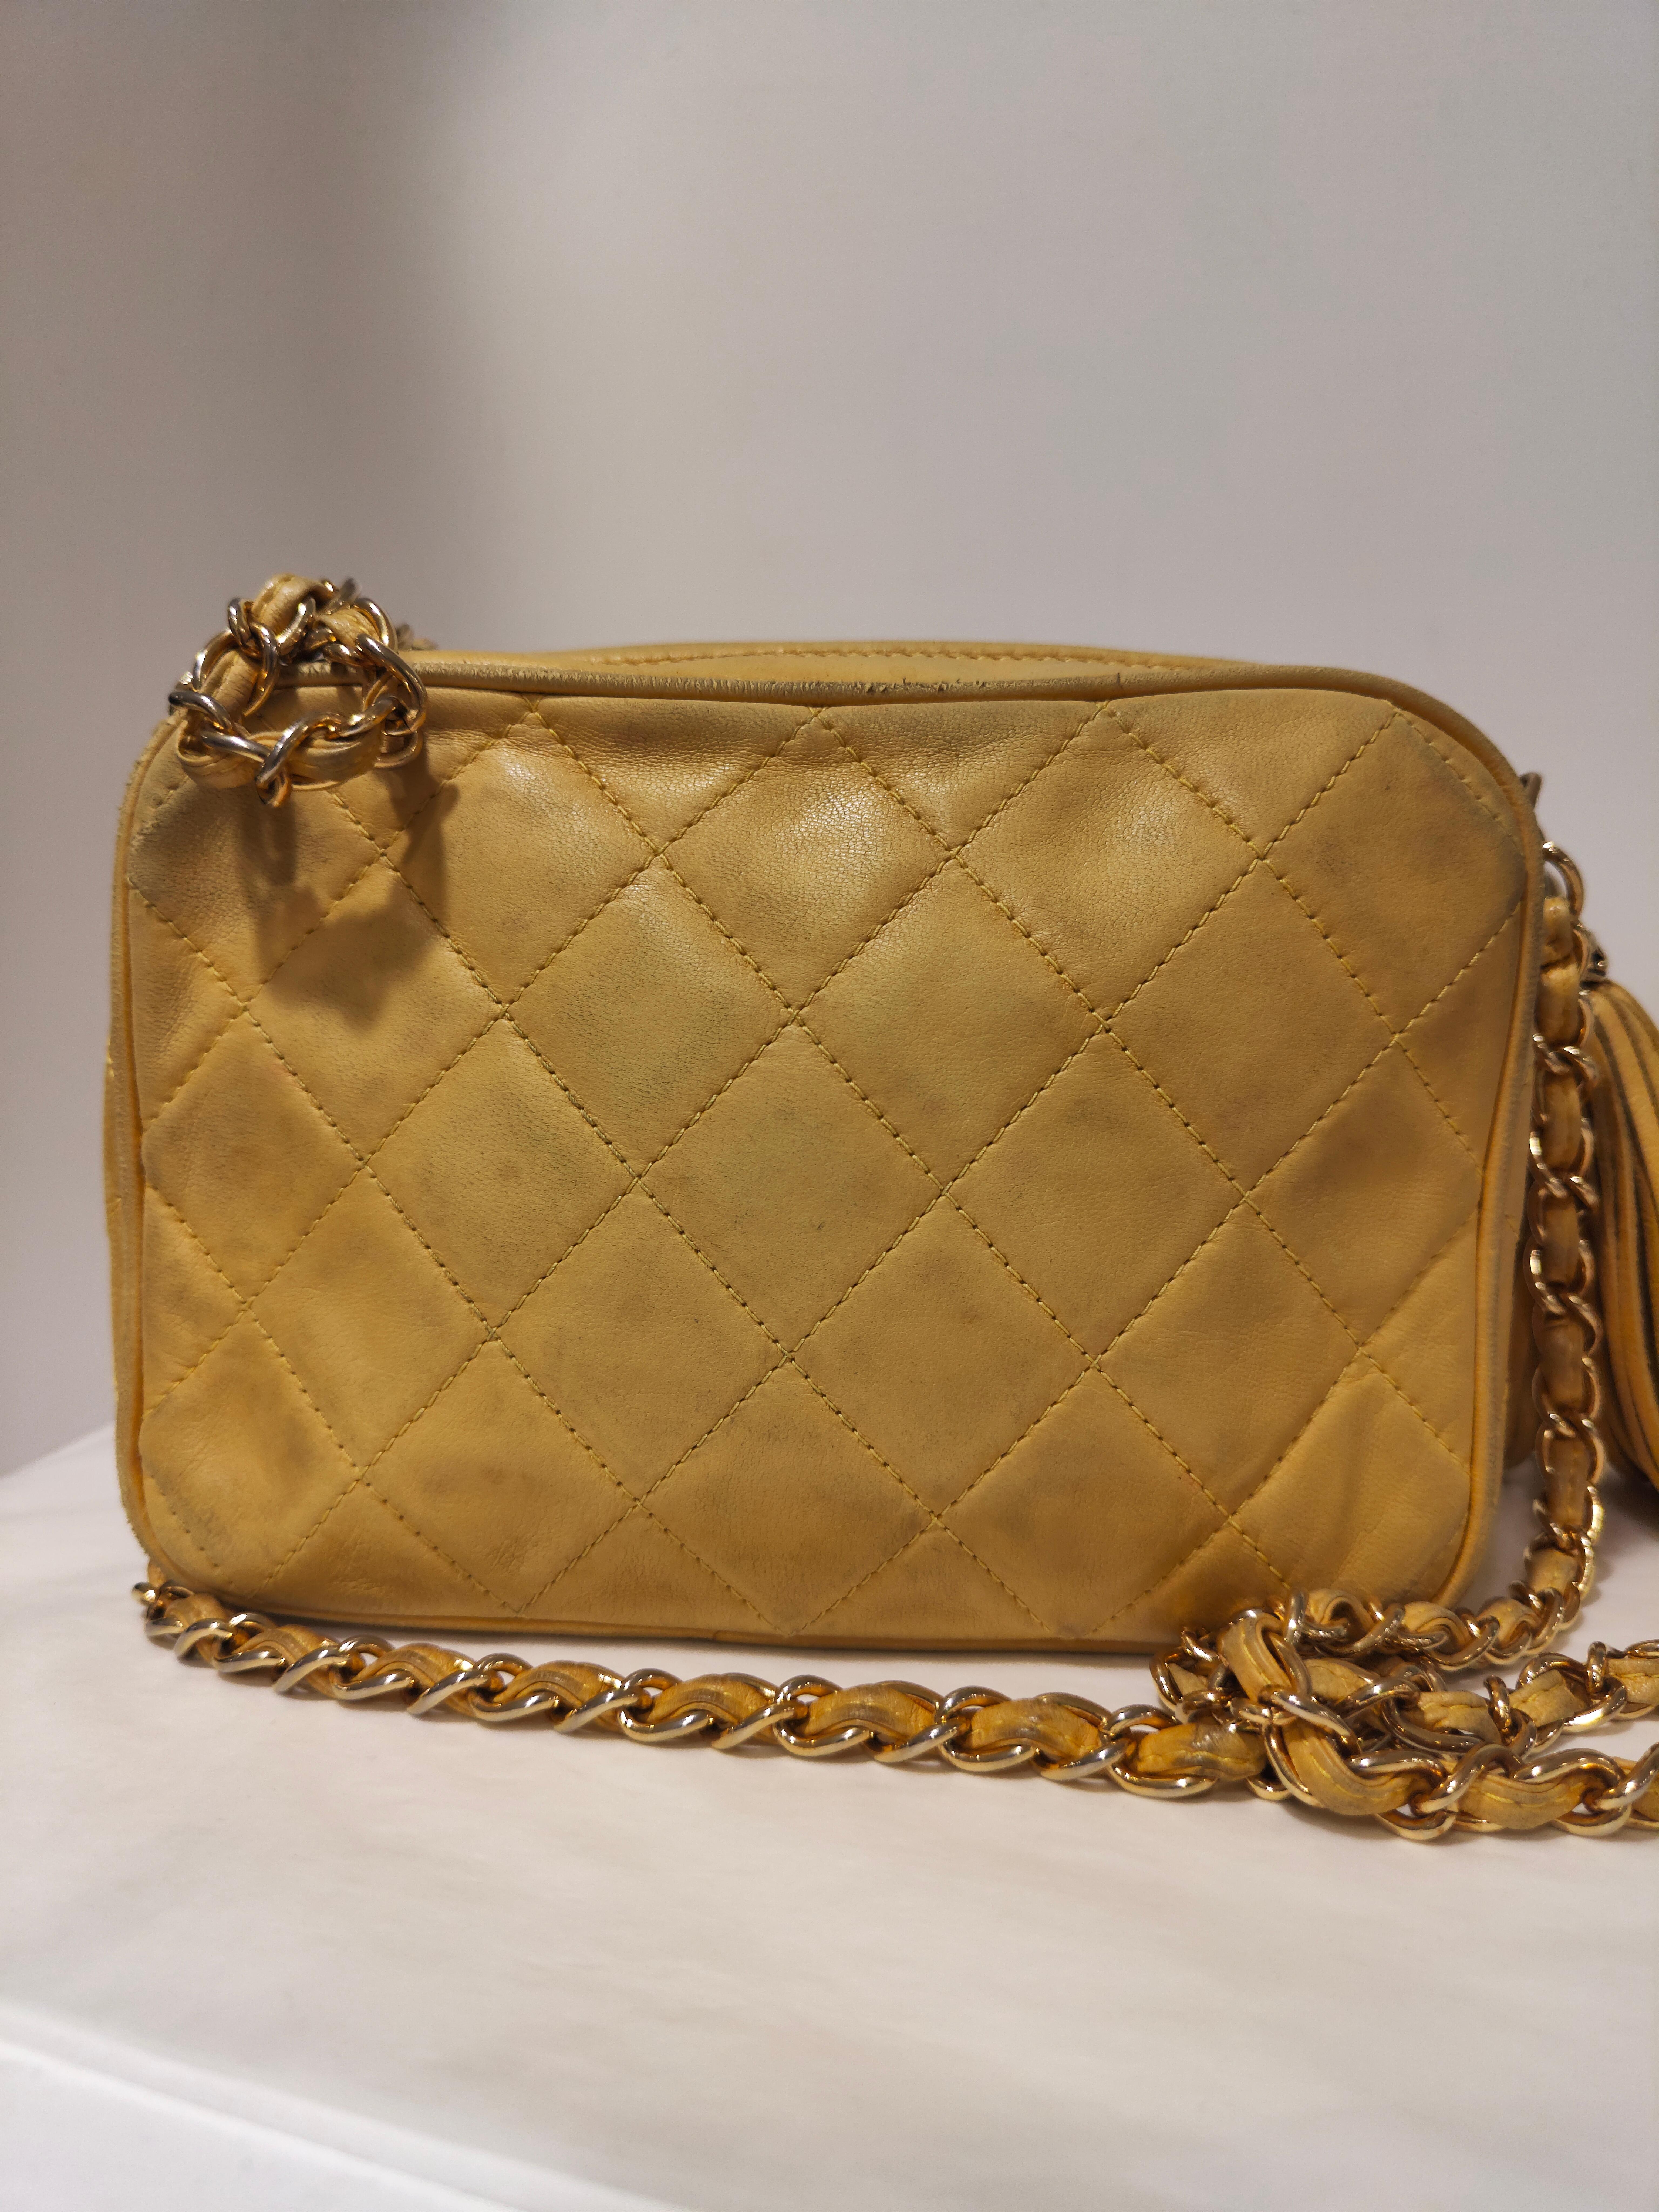 Chanel Yellow leather camera shoulder bag
gold tone hardware
19*12cm, 6.5 cm depth